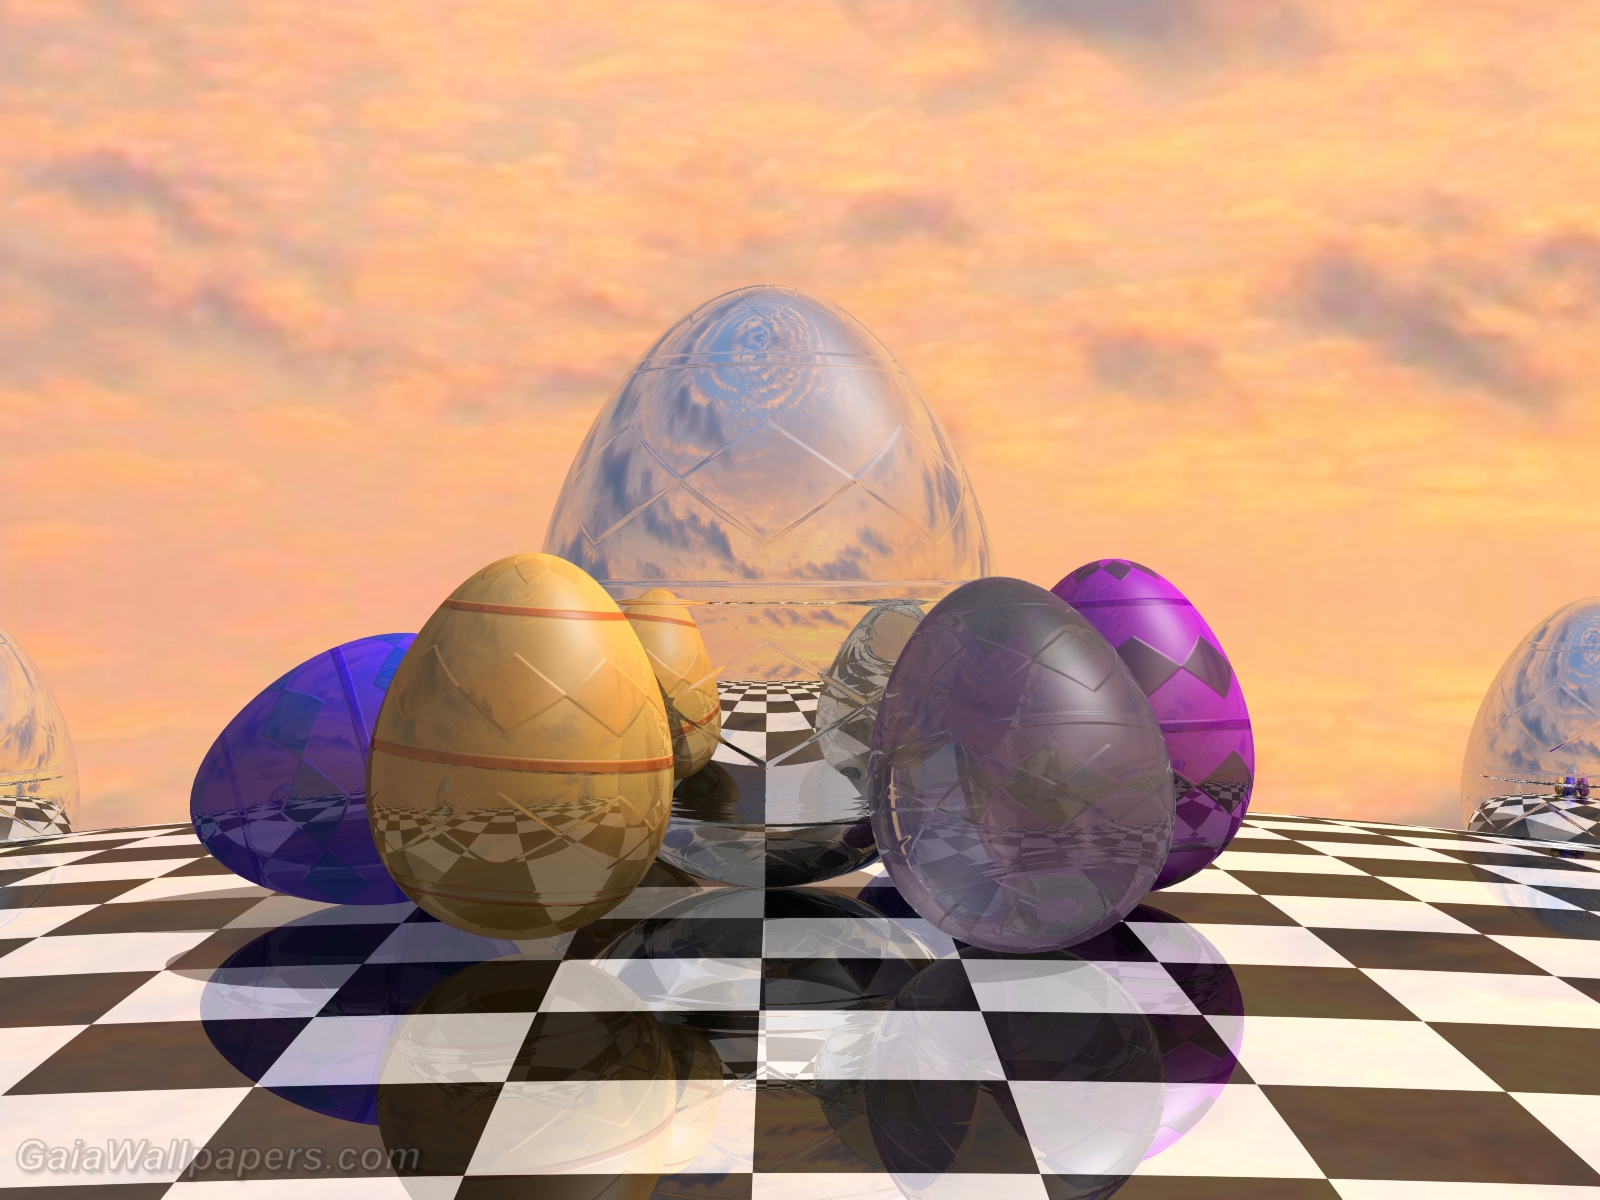 Virtual Easter eggs - Free desktop wallpapers